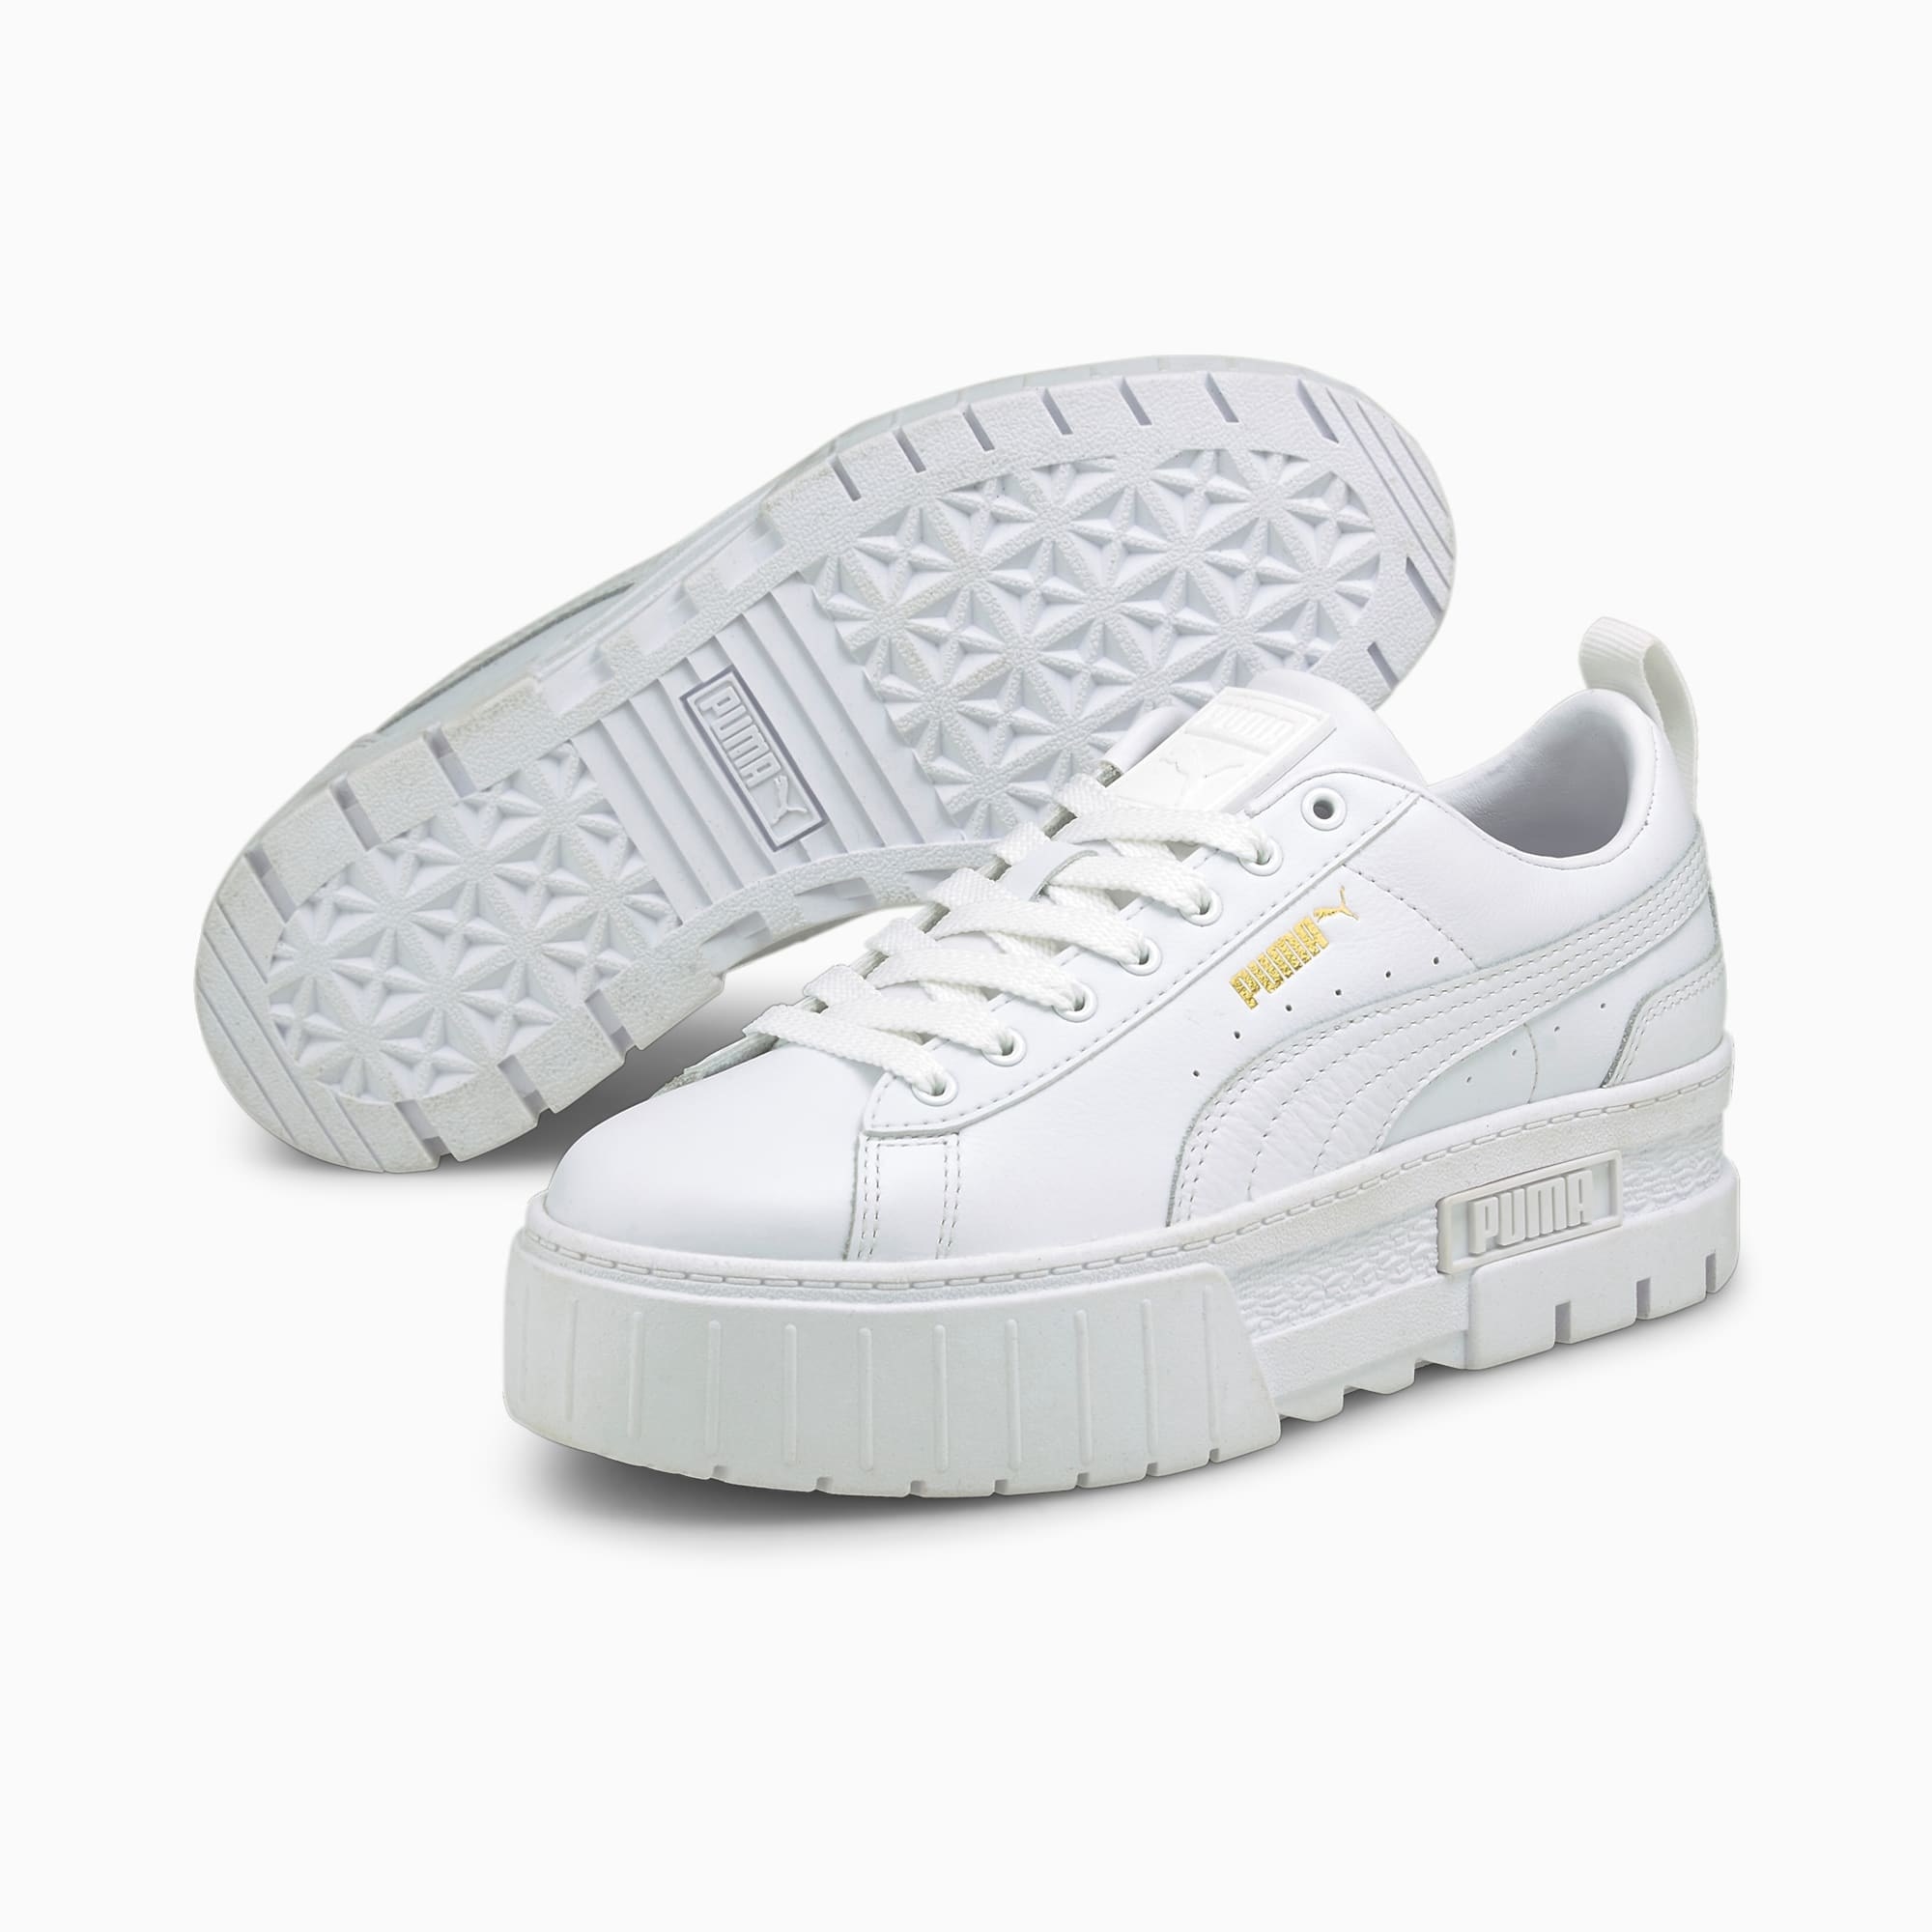 a pair of white Puma platform sneakers